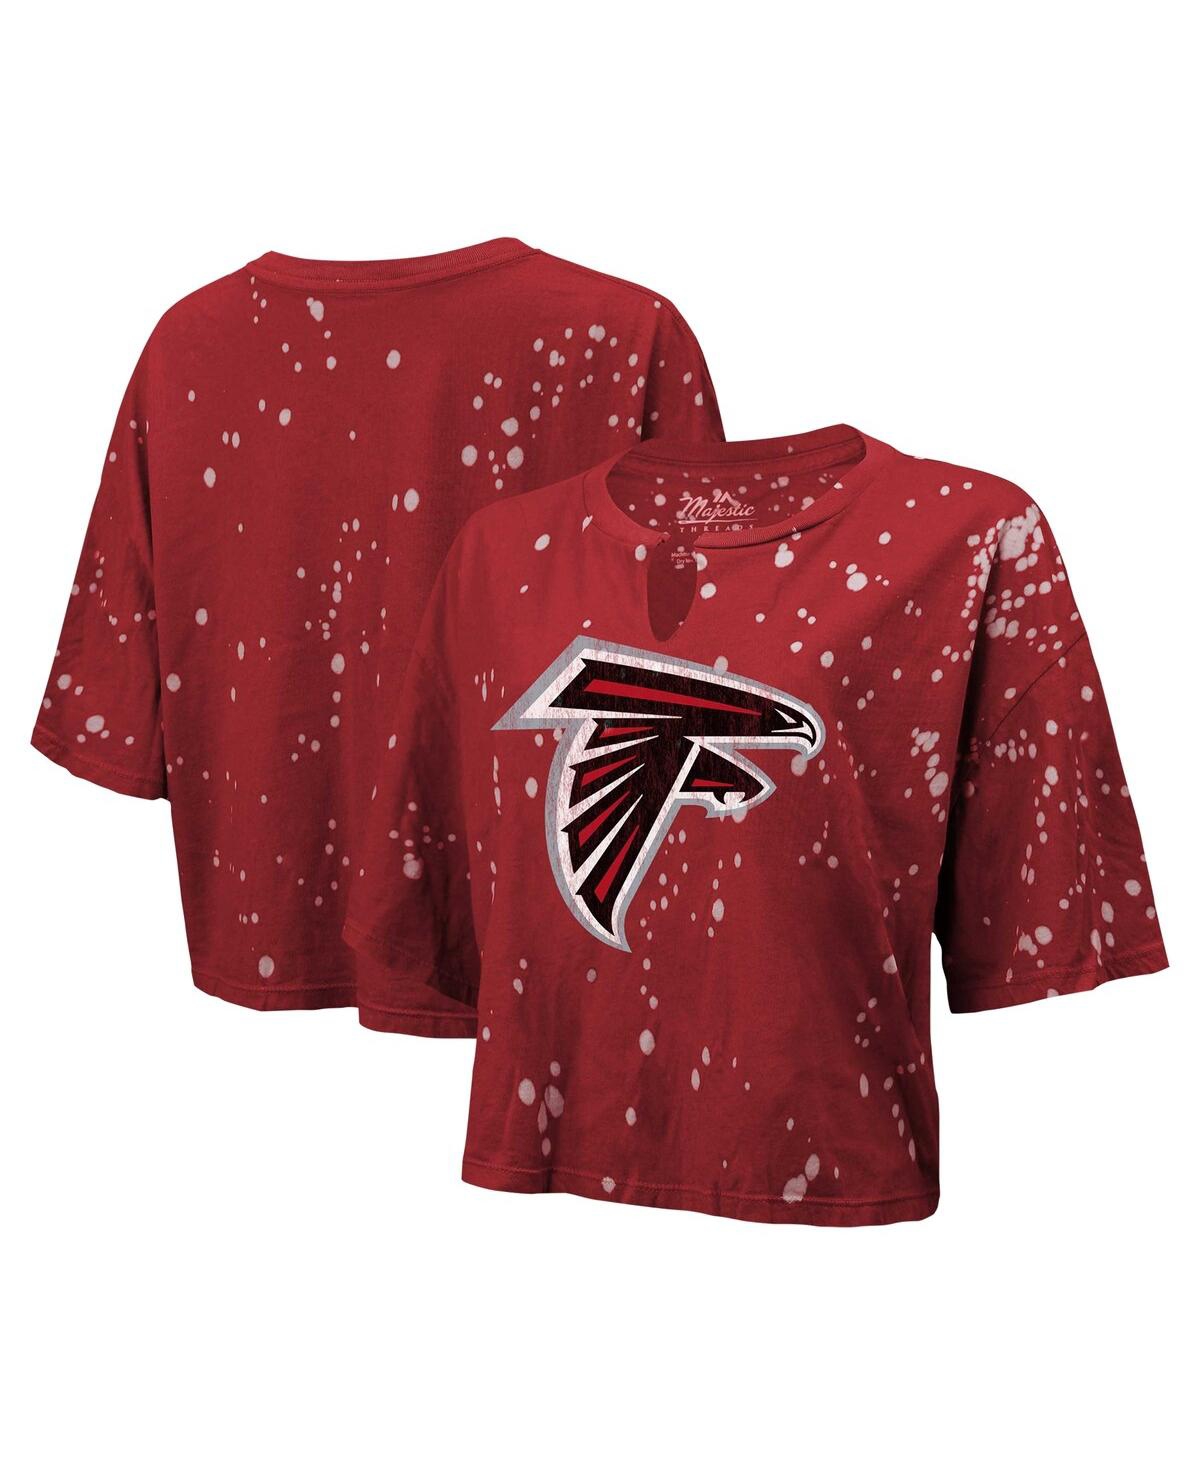 Women's Majestic Red Distressed Atlanta Falcons Bleach Splatter Notch Neck Crop T-shirt - Red